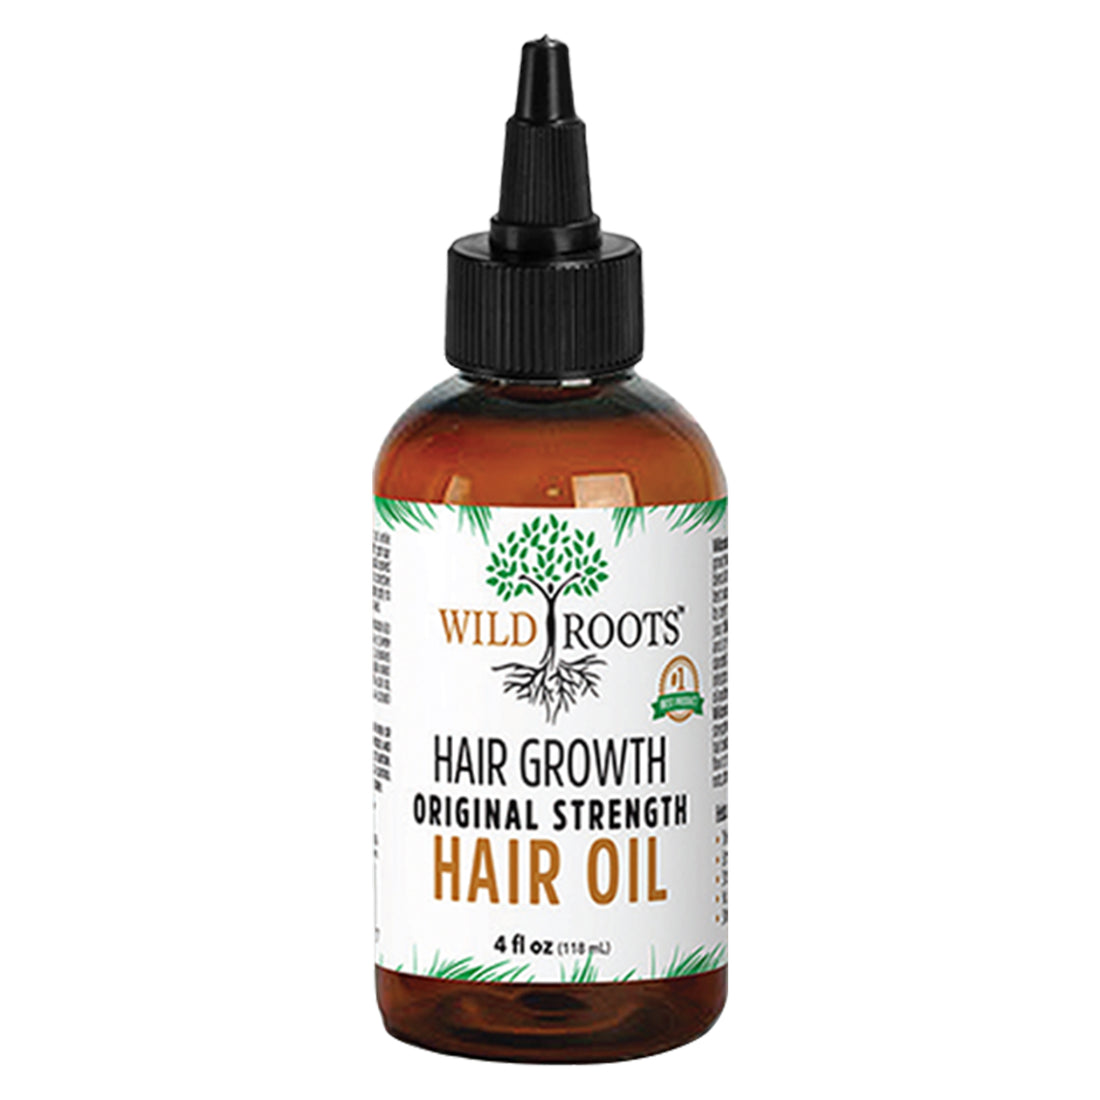 Hair Oil, Hair Growth Oil